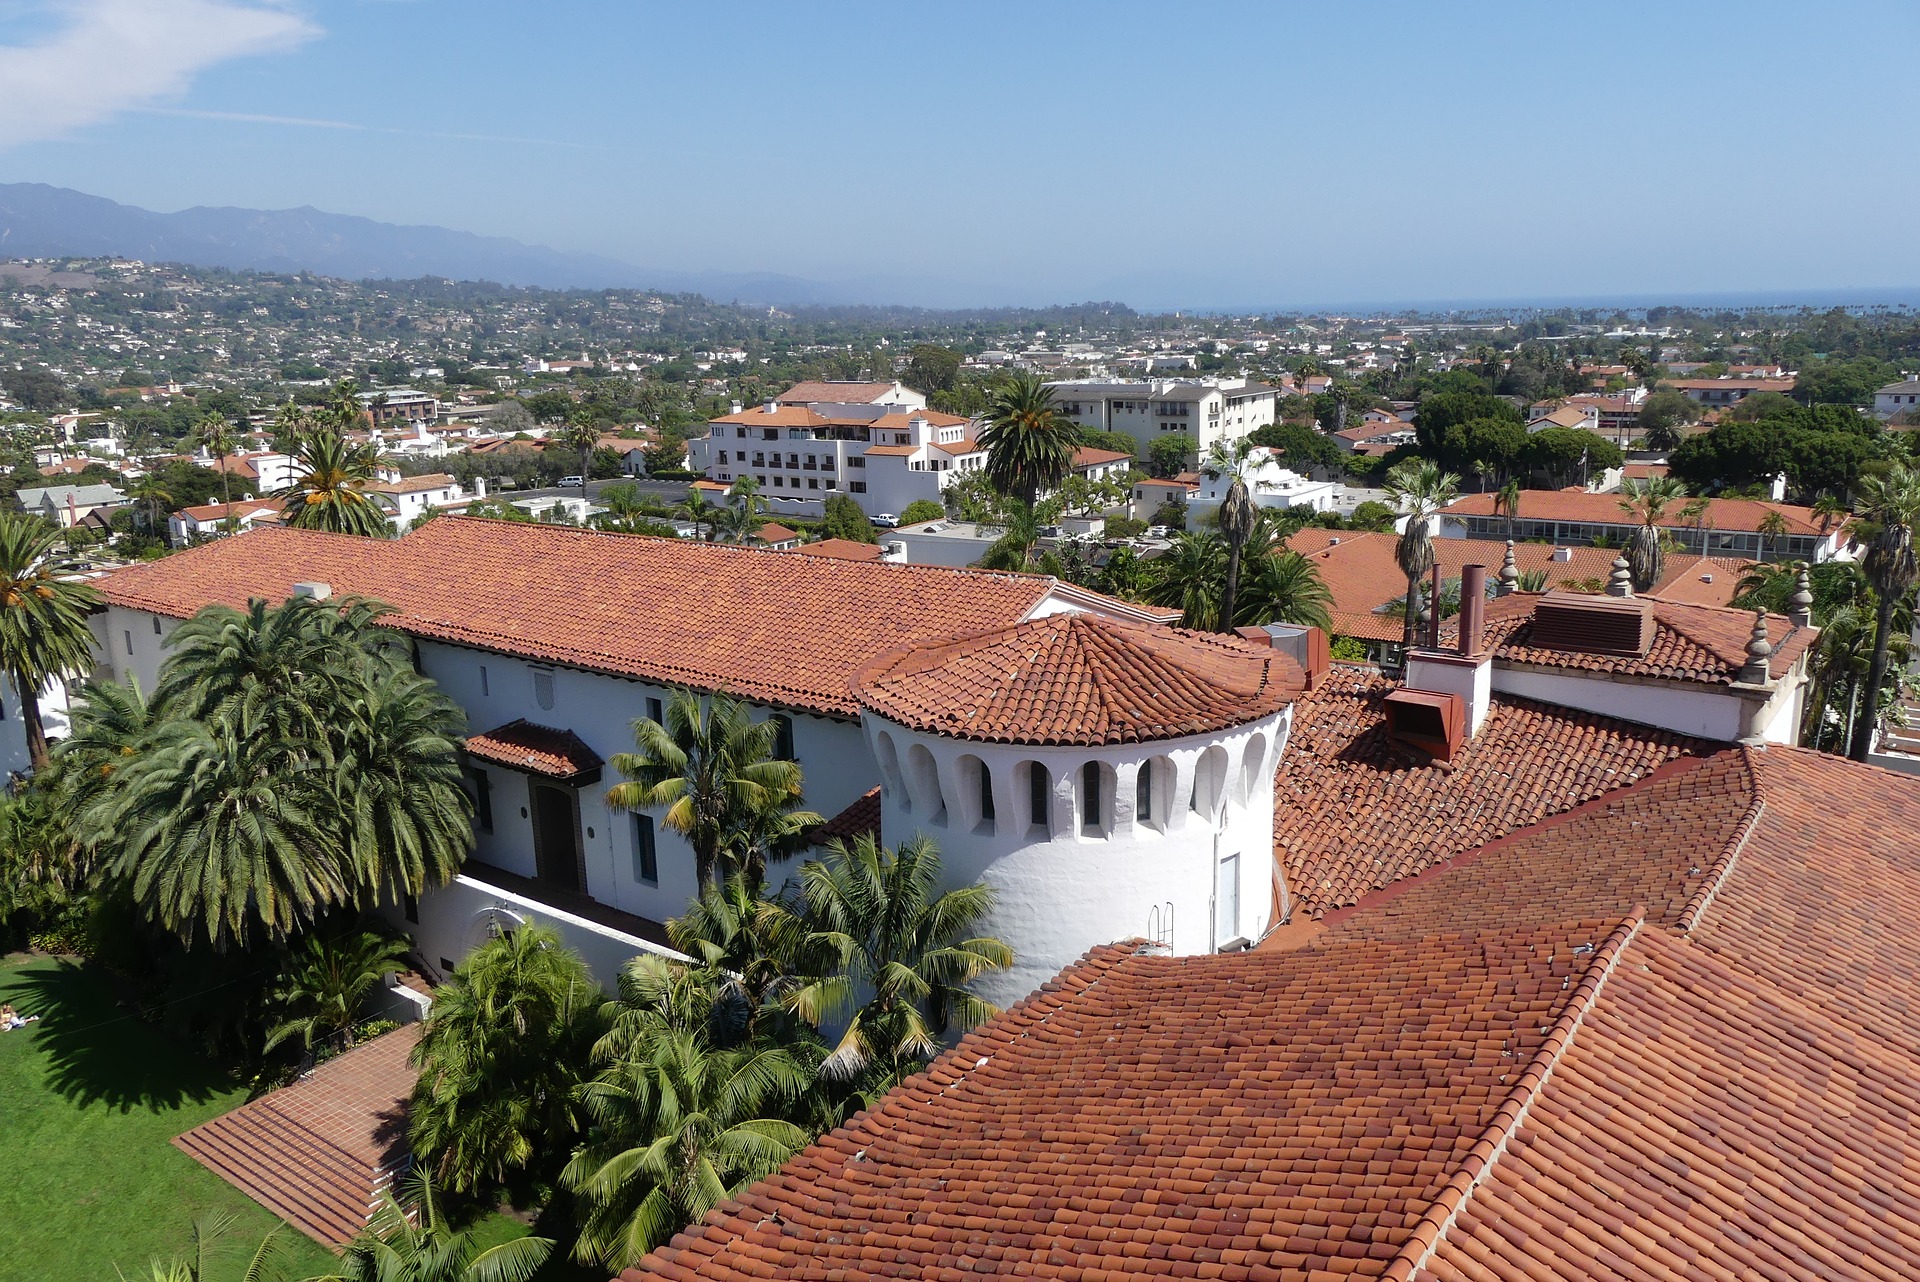 Verenigde staten-californie-santa barbara-gebouwen-huizen-landschap